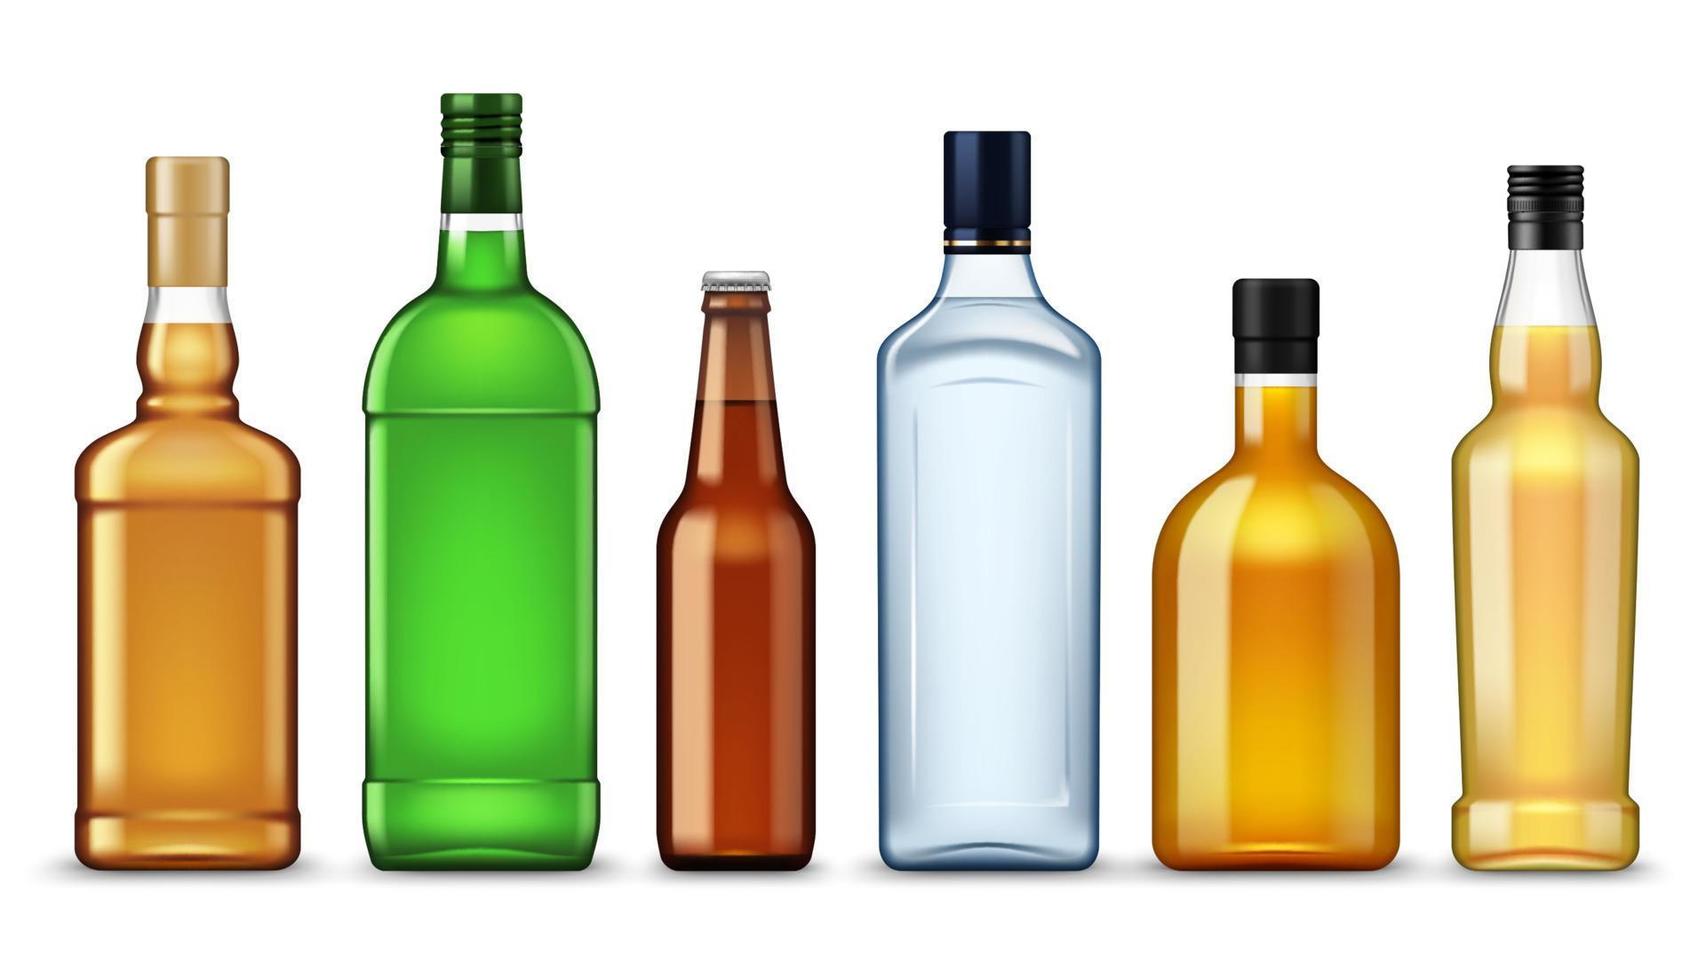 glasflaschen, alkoholgetränke 3d-modelle vektor